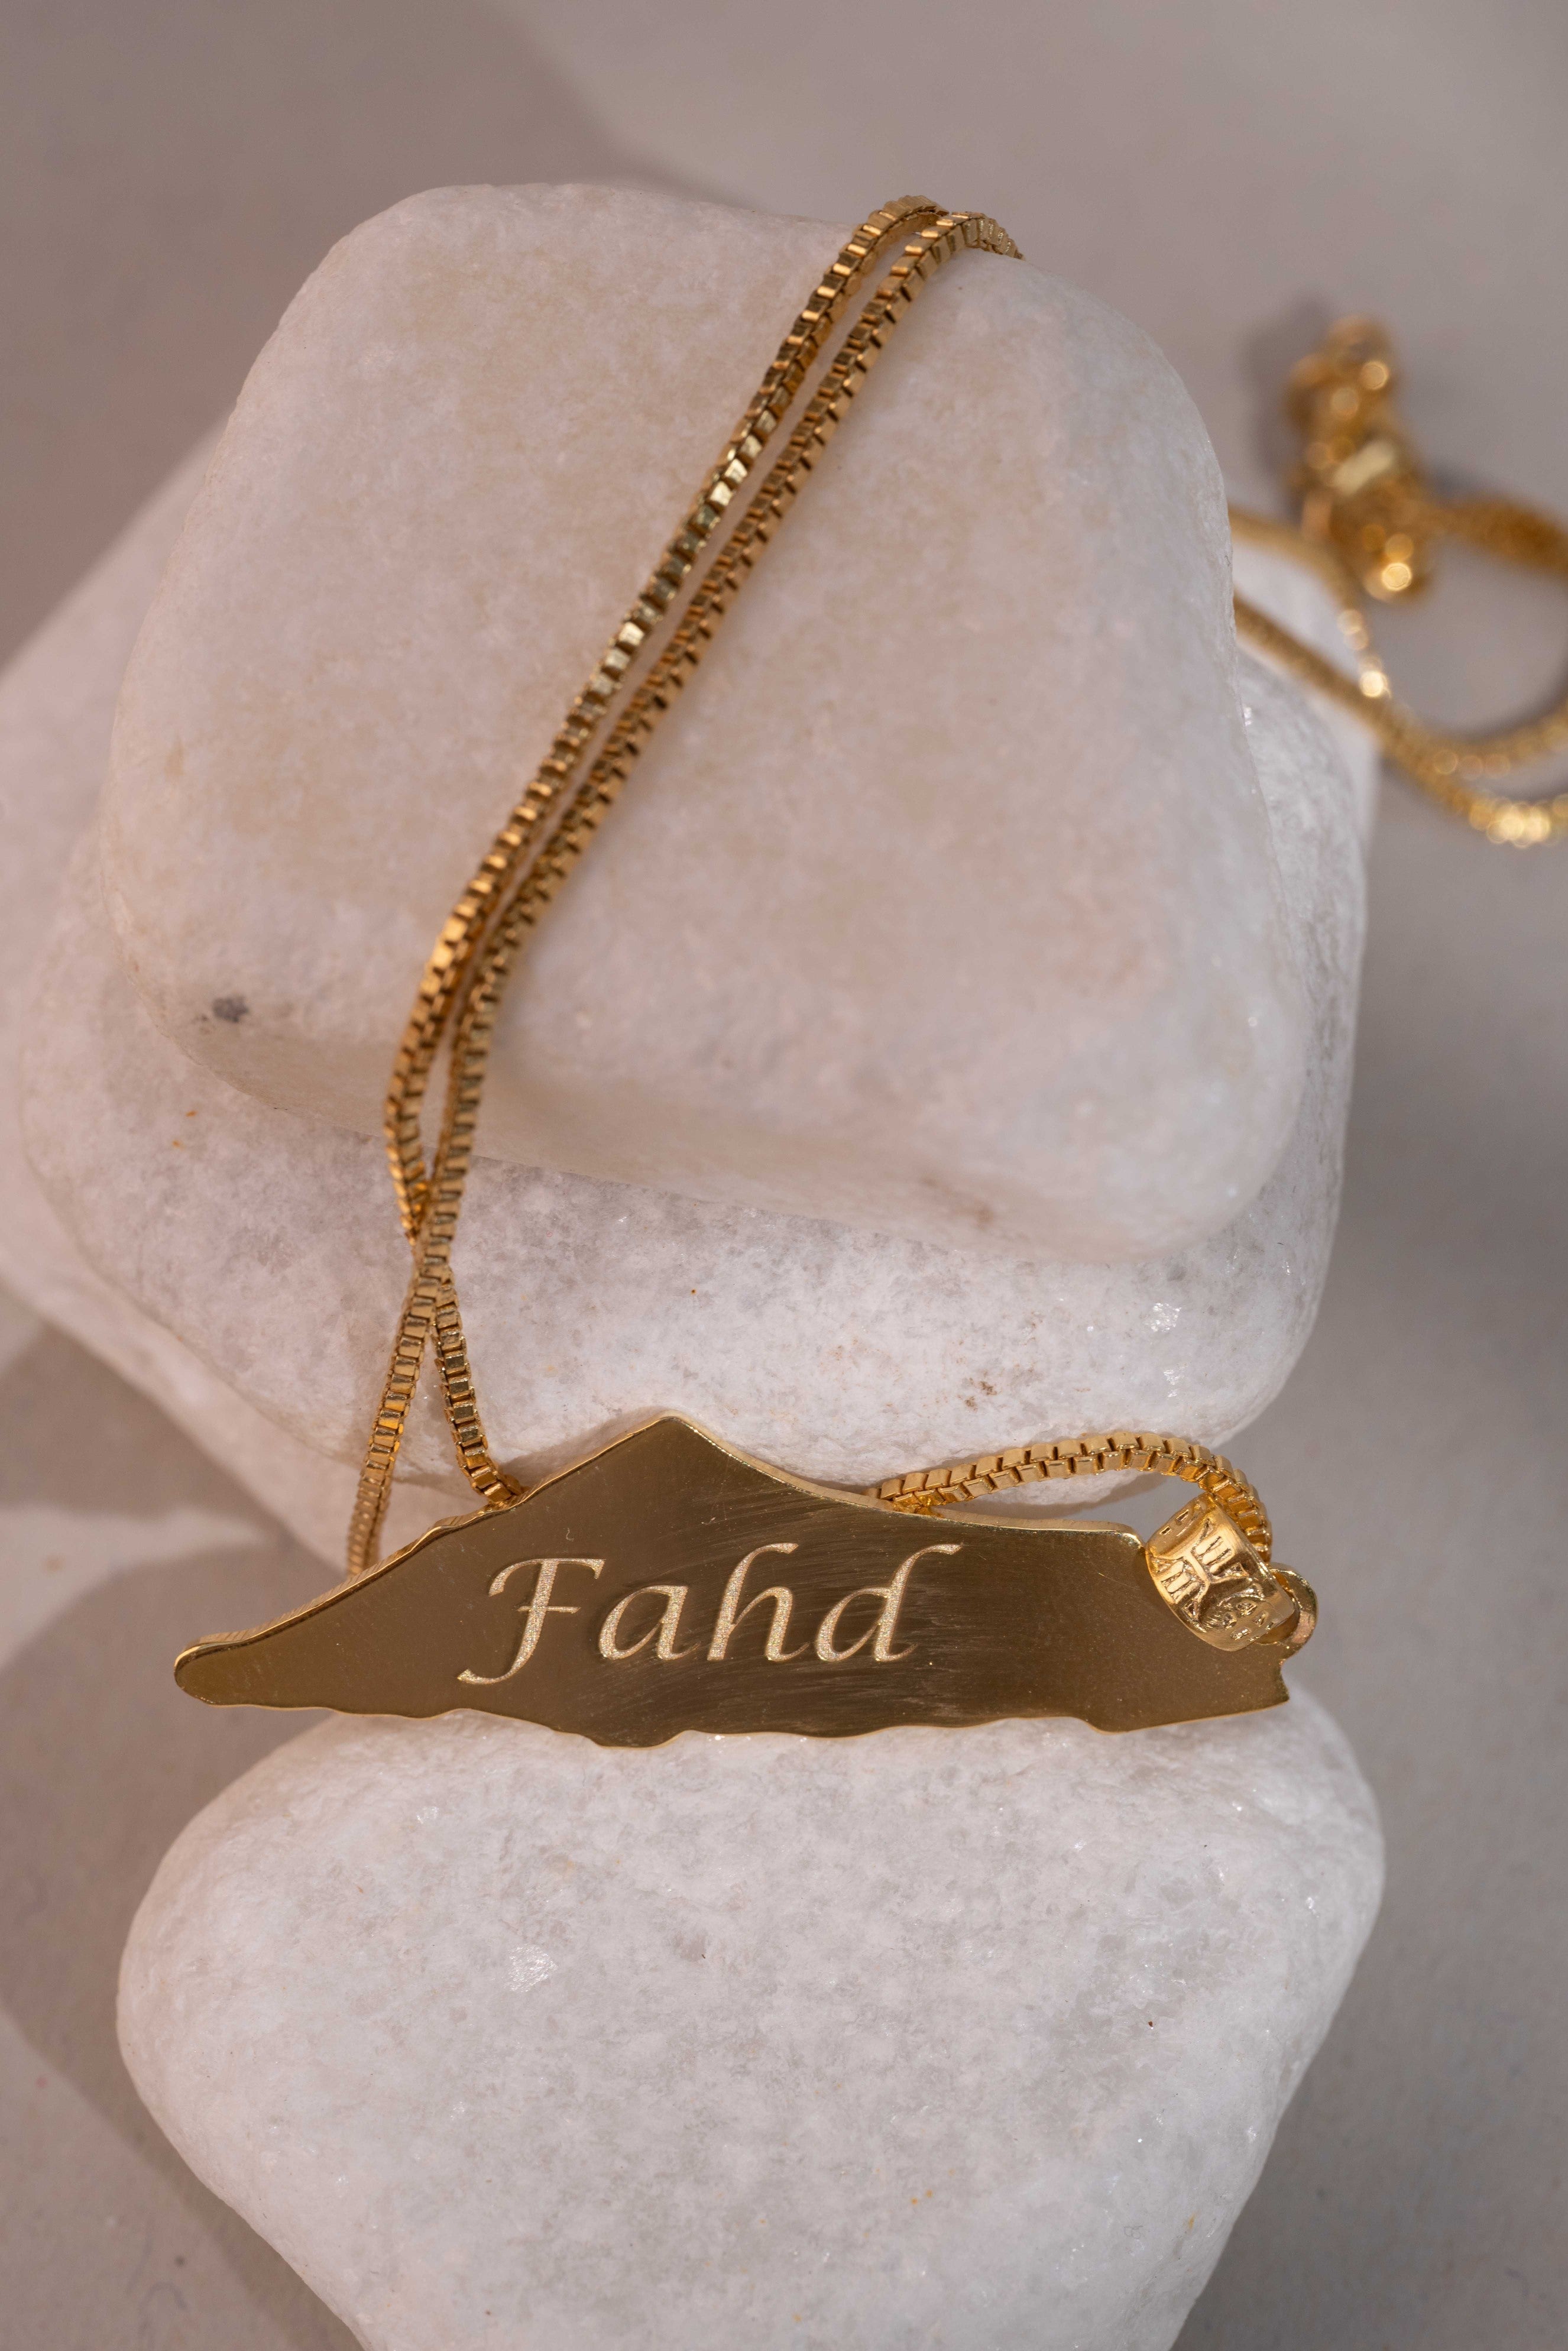 Palestine Necklace (customize your name) - Yshmk